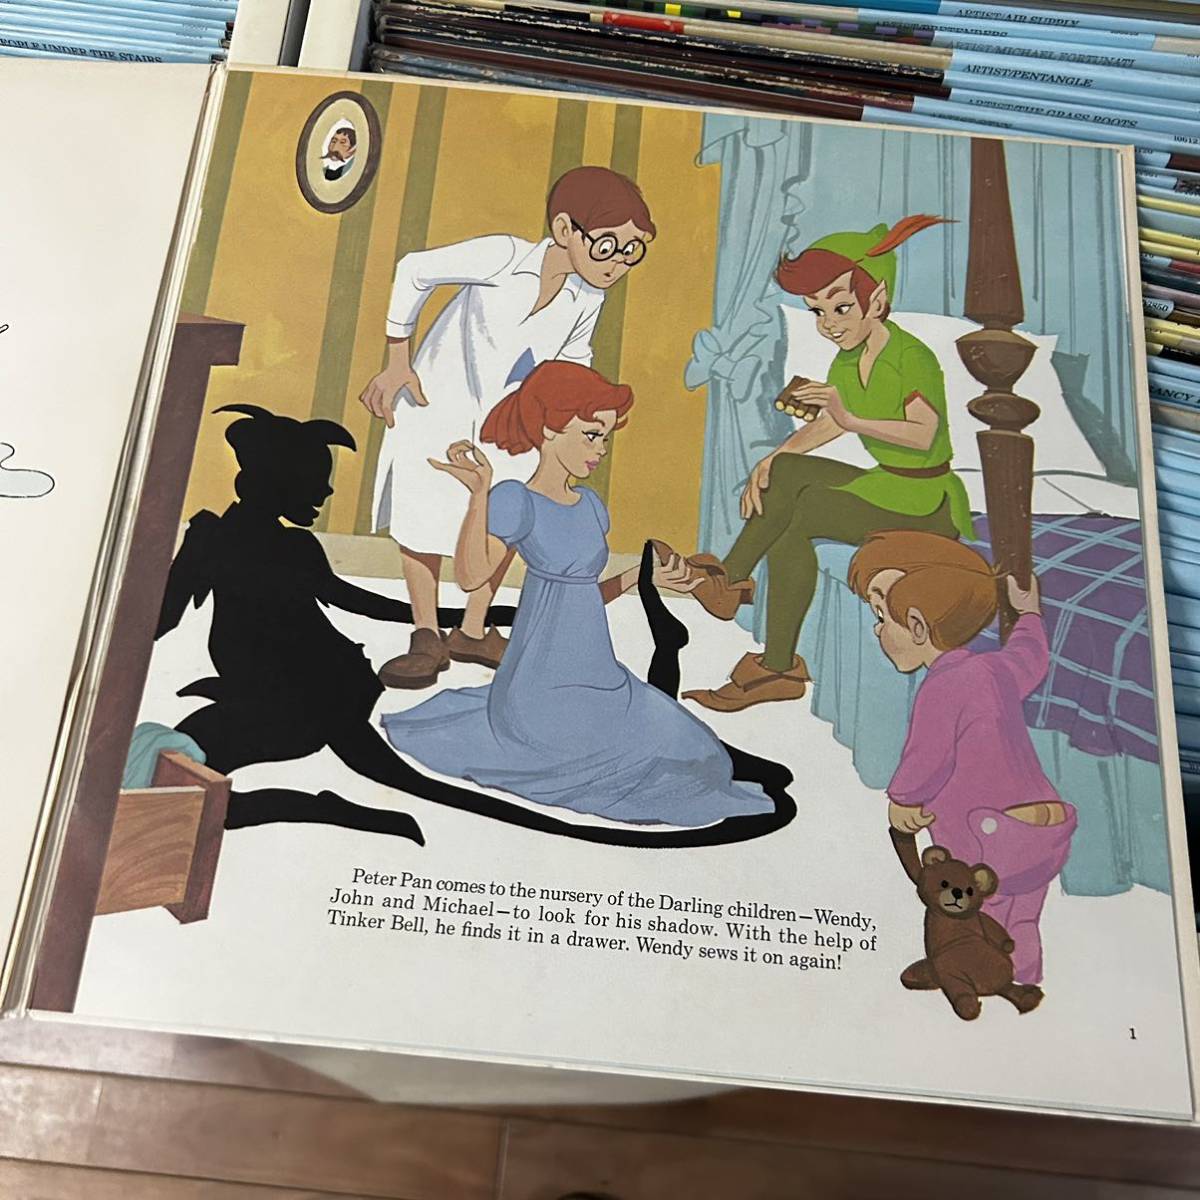 OST / PETER PAN [LP] Disney US record 1969 year MONO 3910